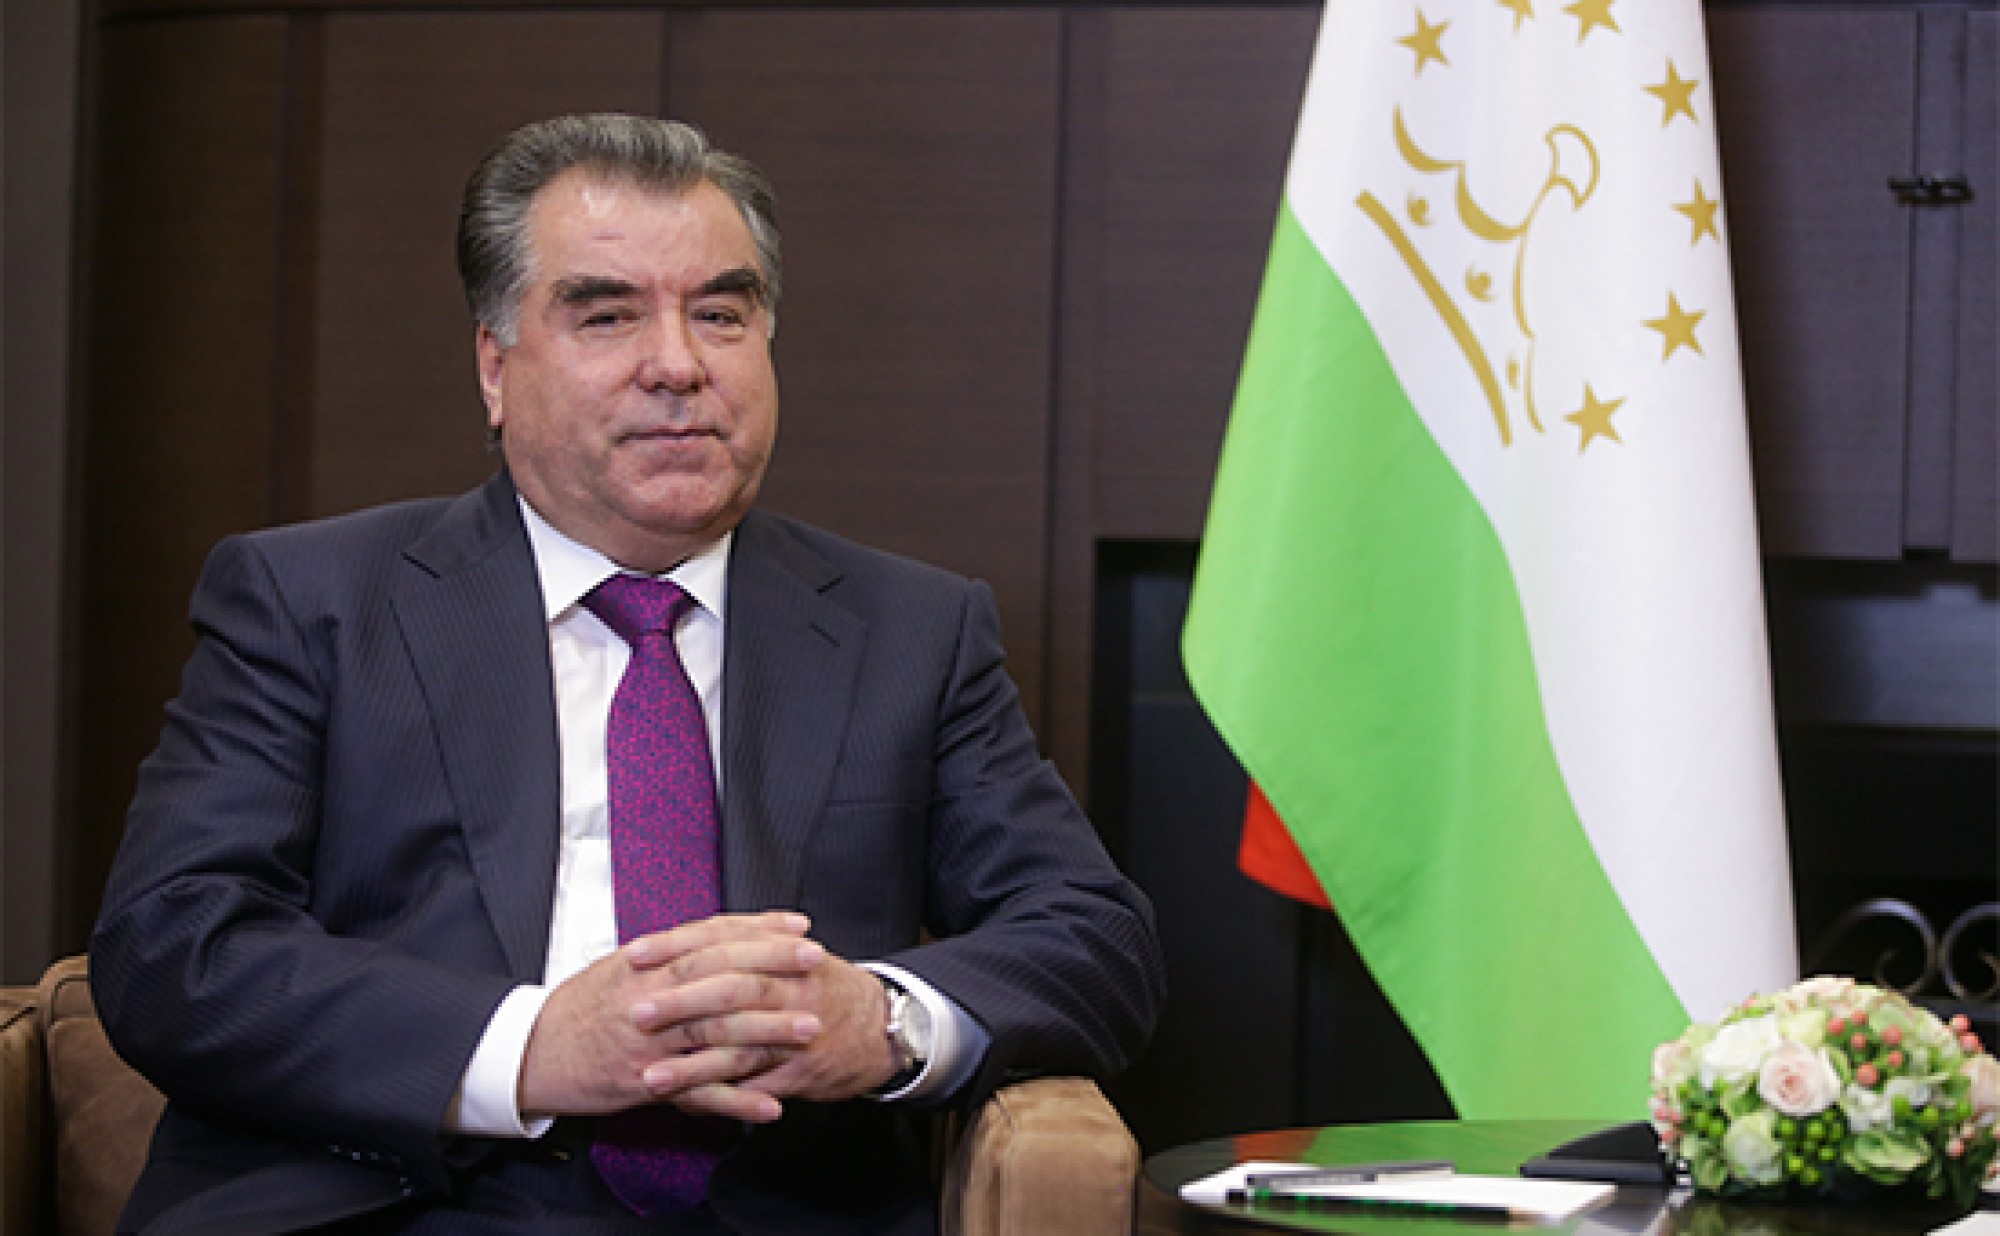 Tajik President arrives for official visit to Astana